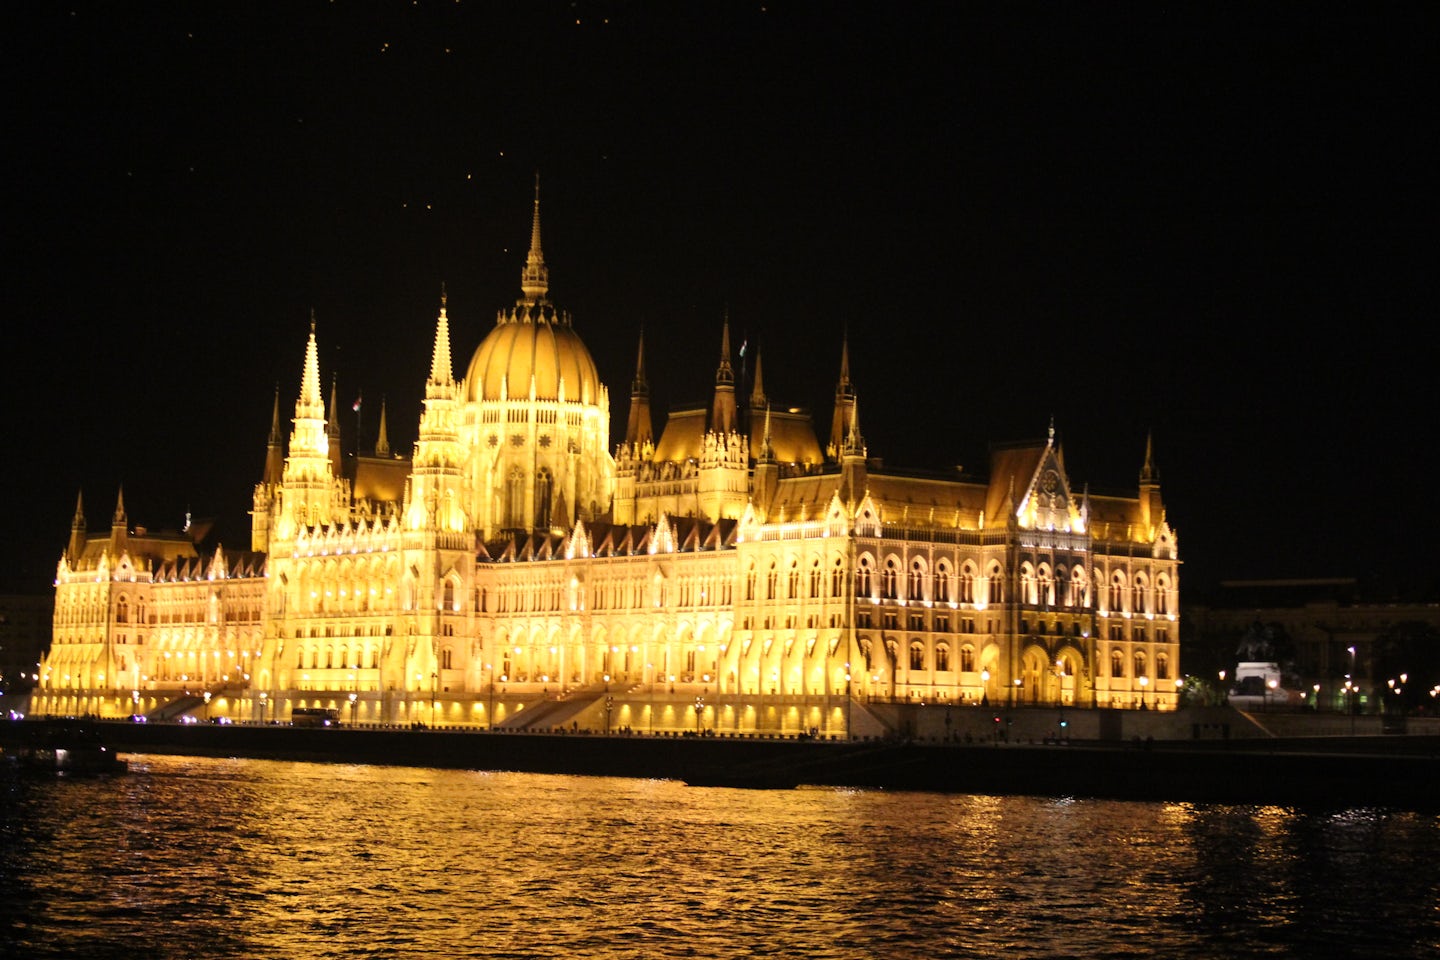 The Budapest Parliament House